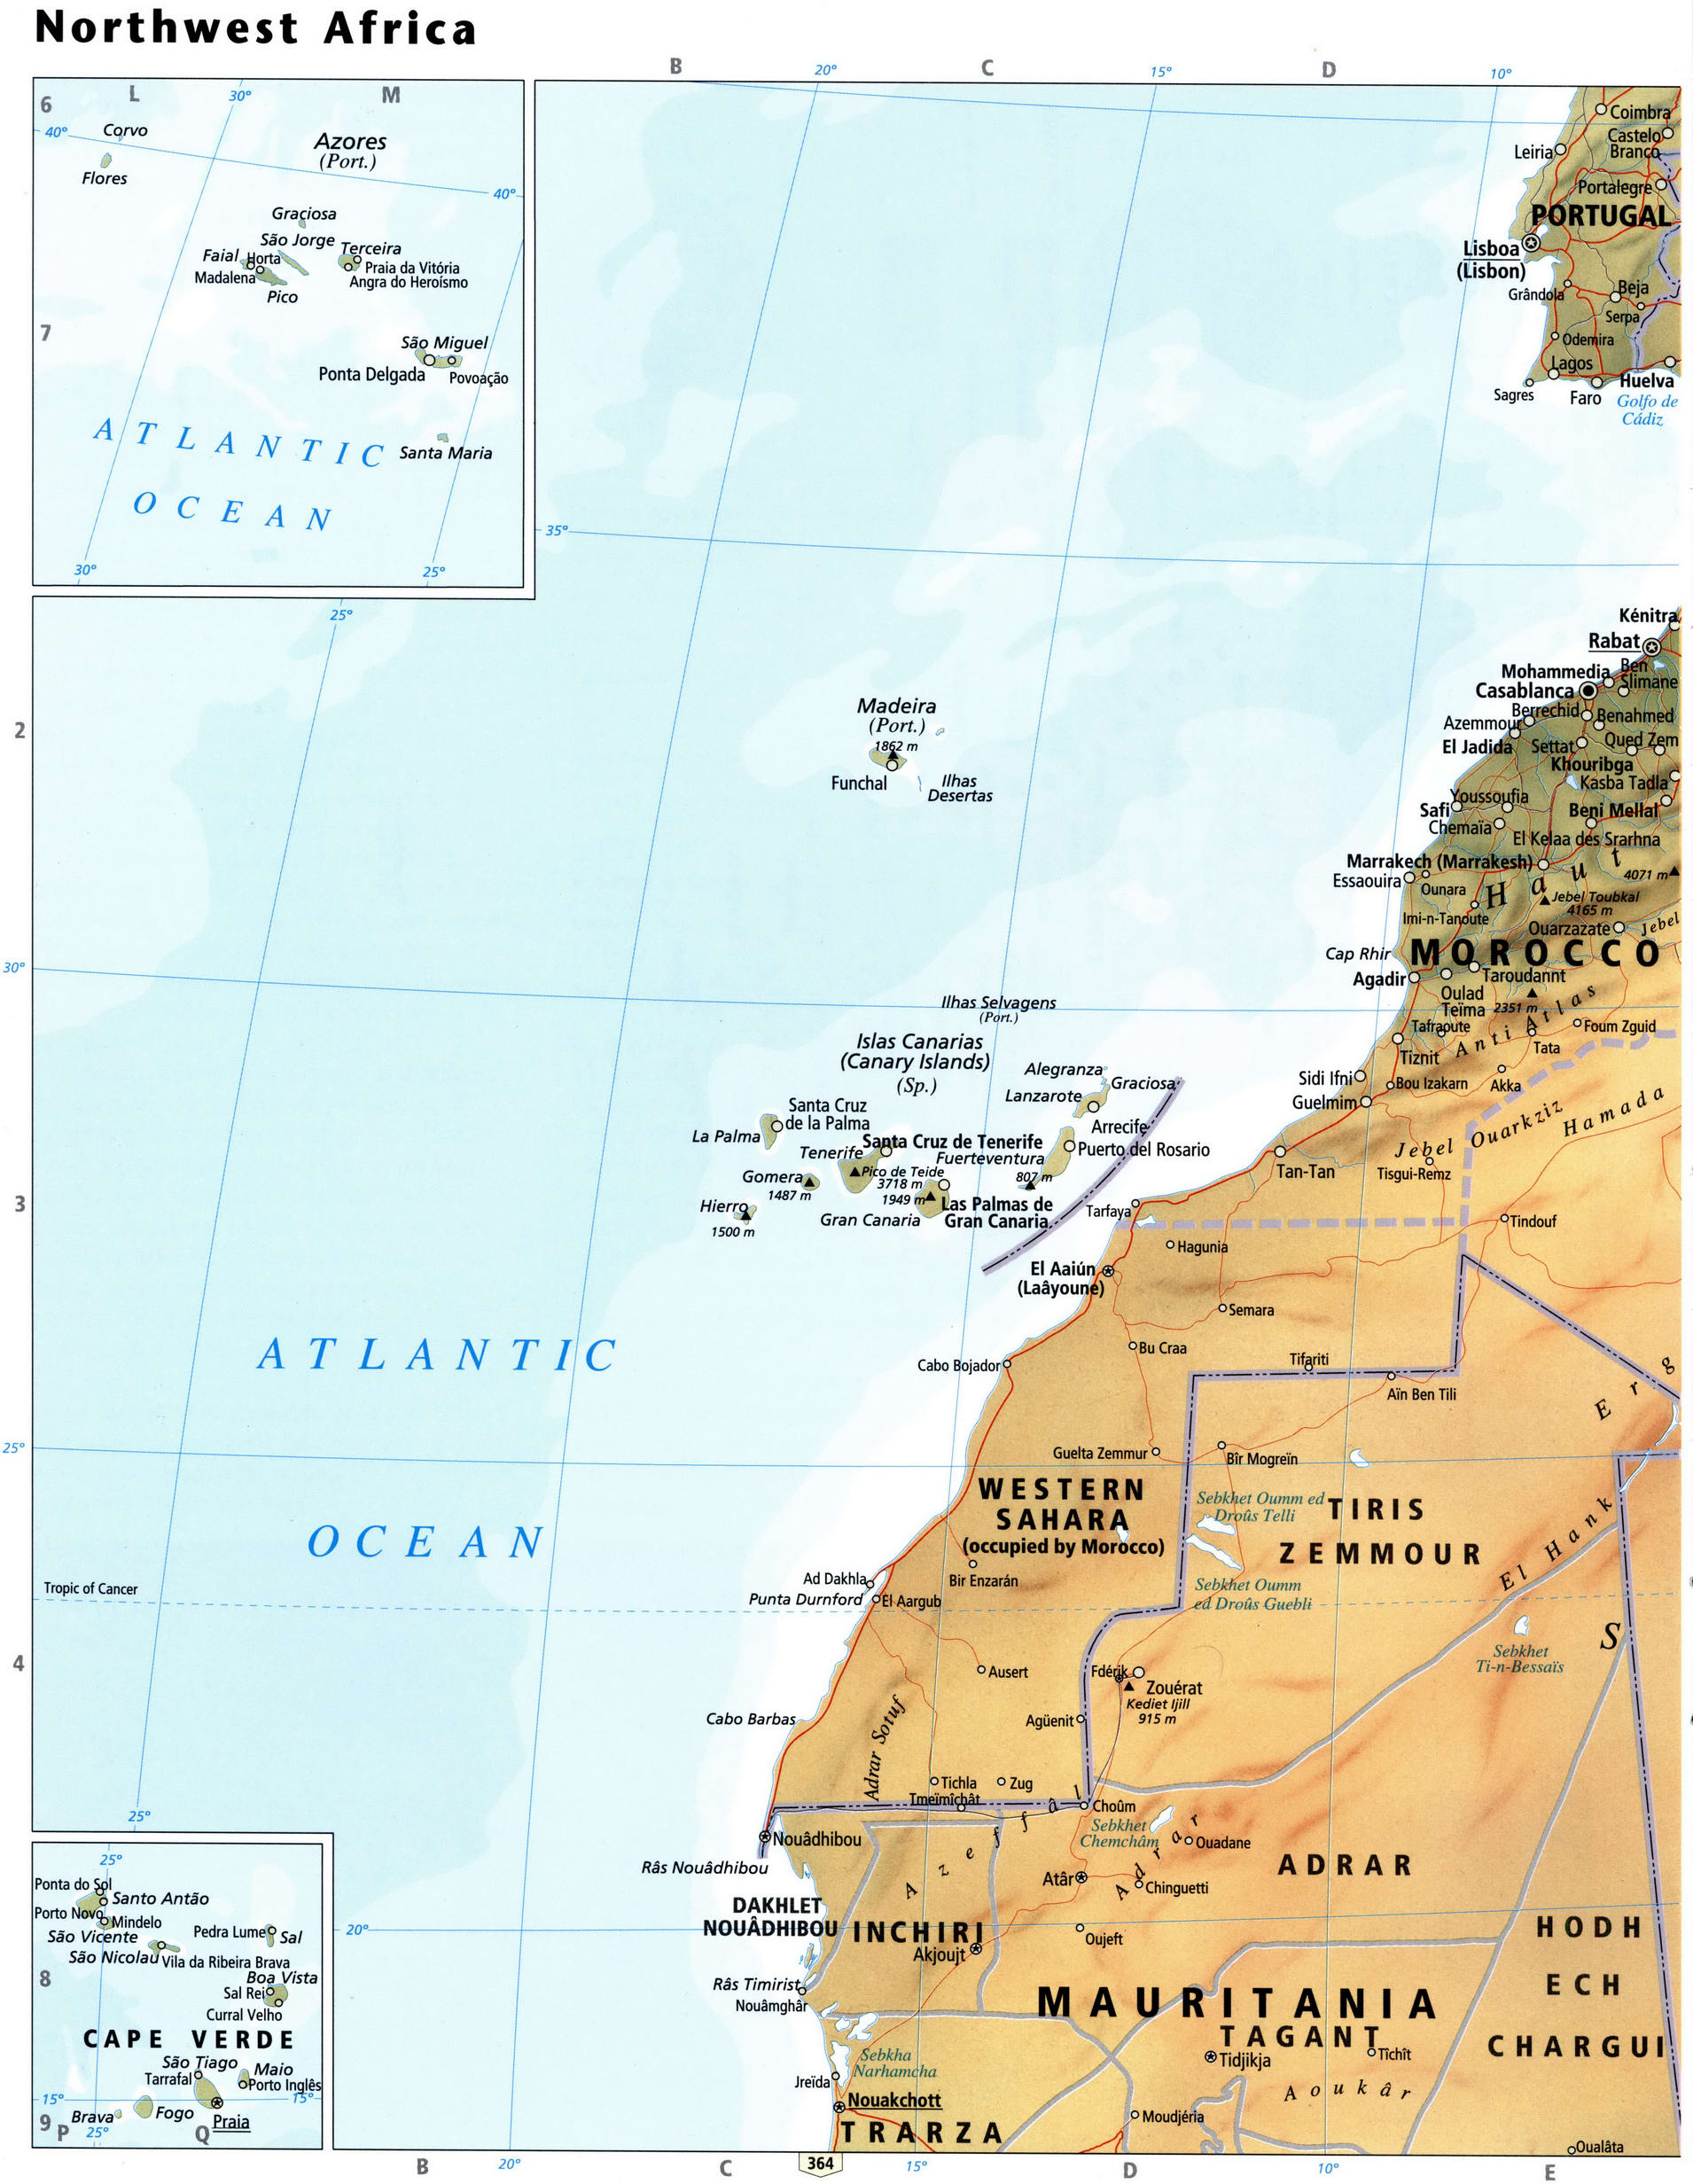 Northwest Africa physical map